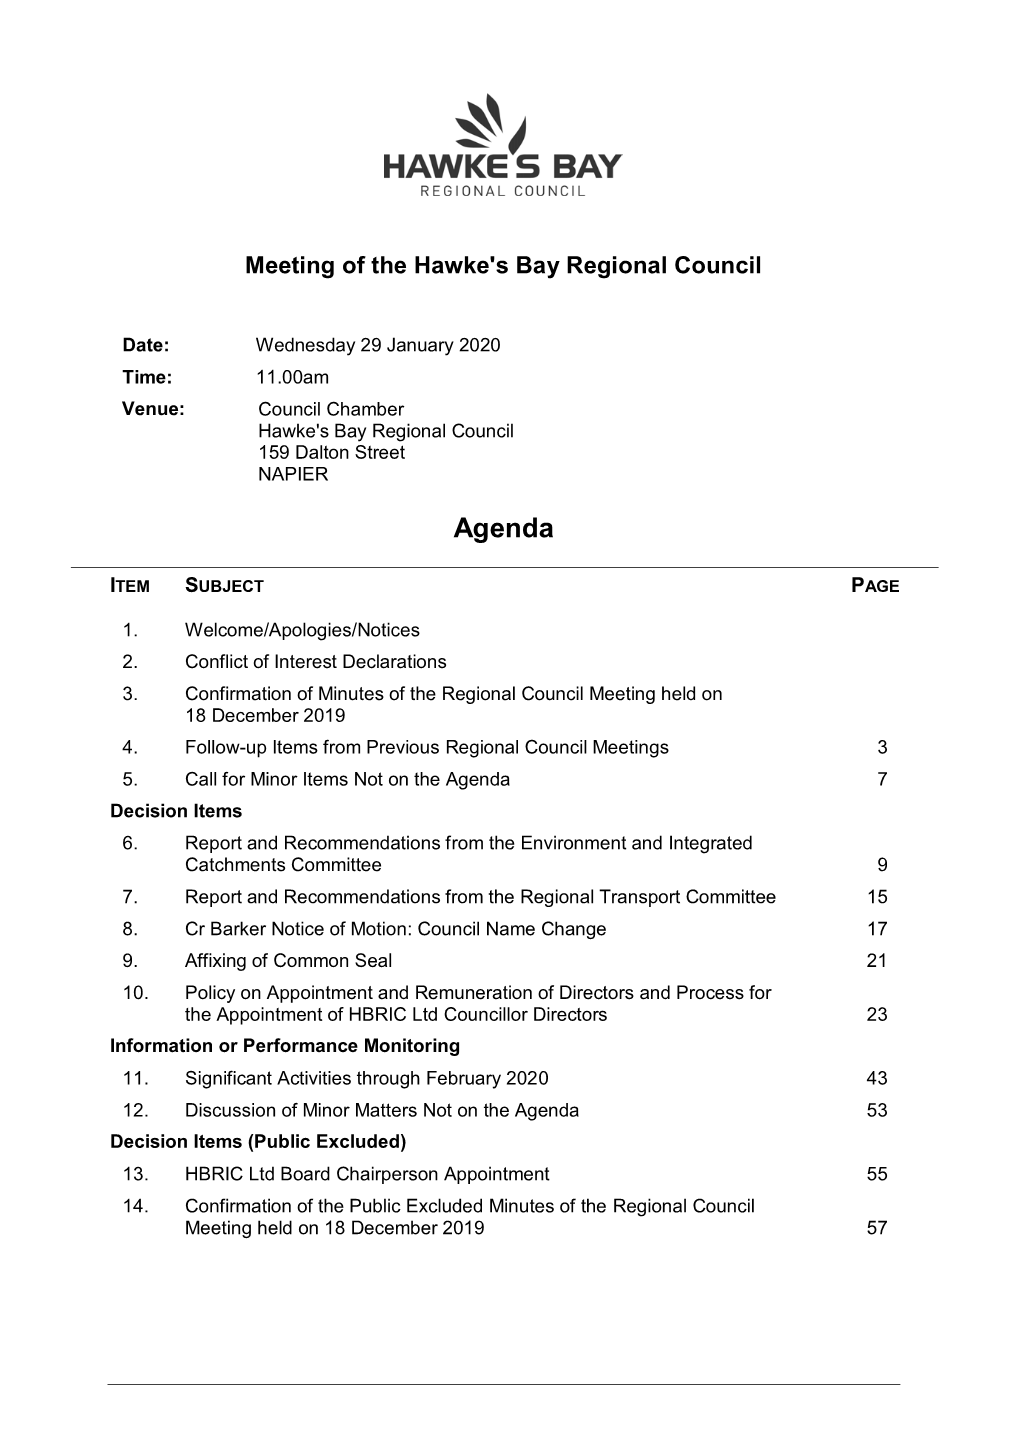 Agenda of Regional Council Meeting